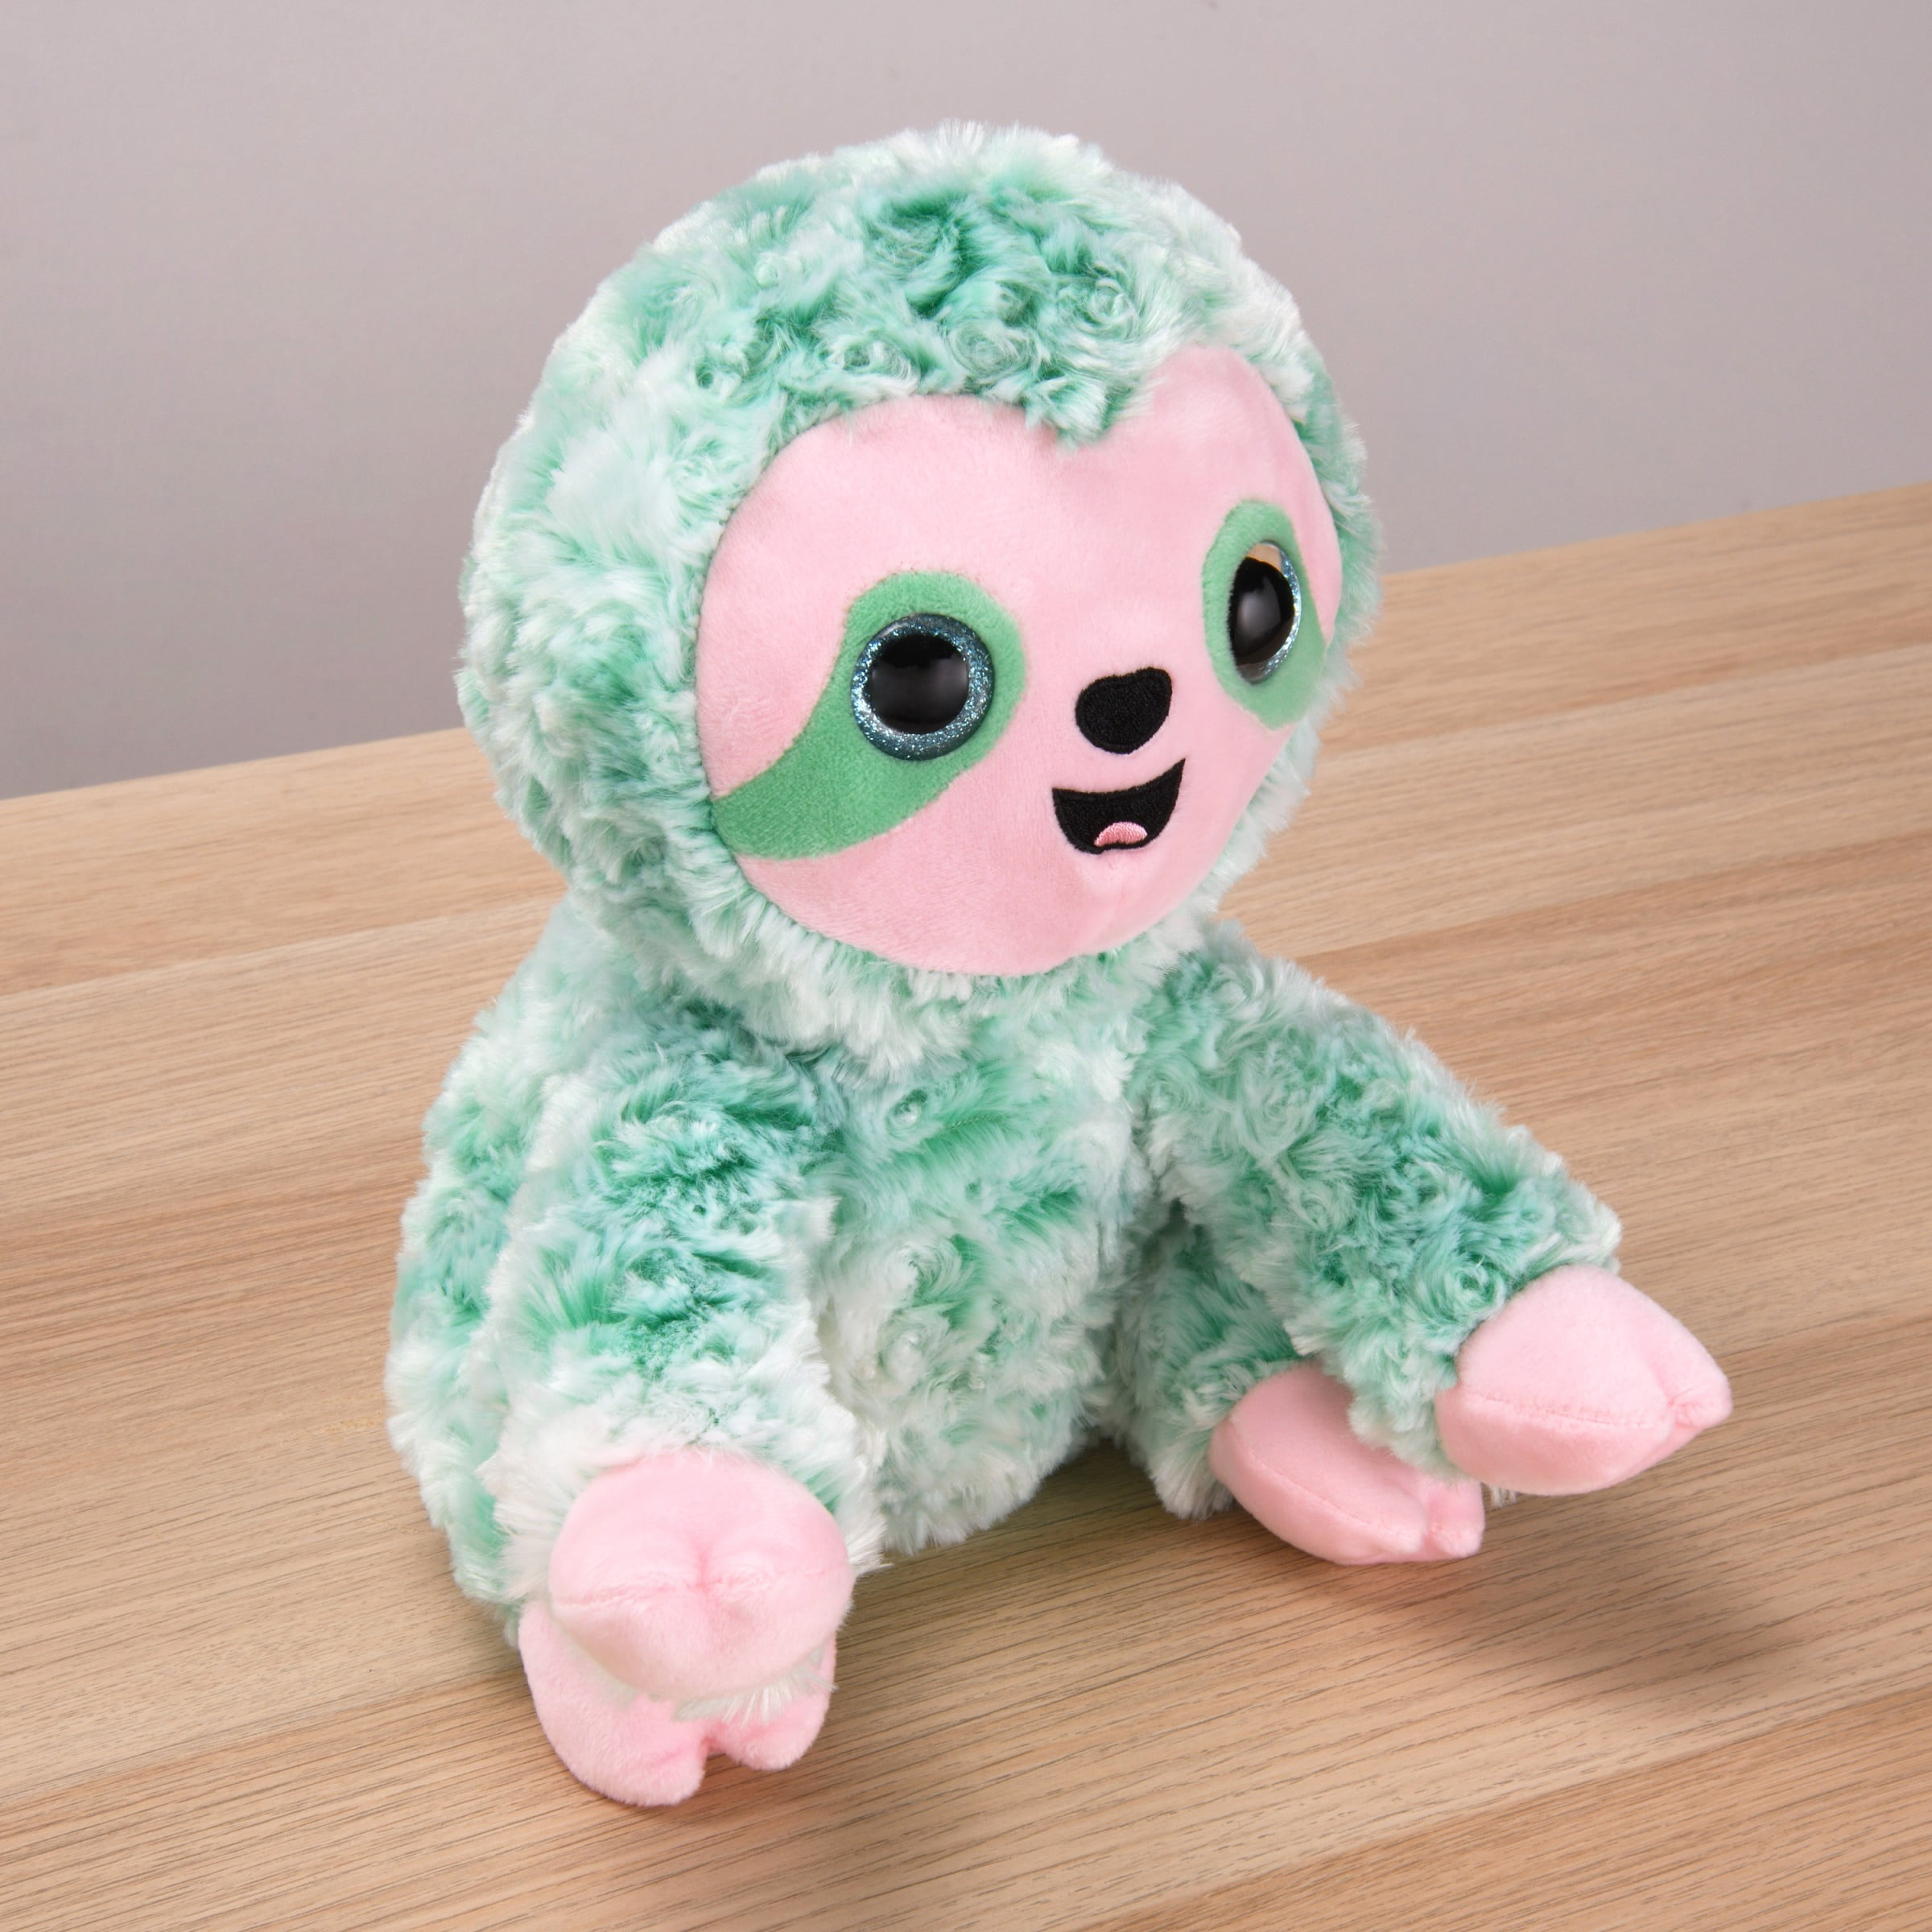 green sloth stuffed animal